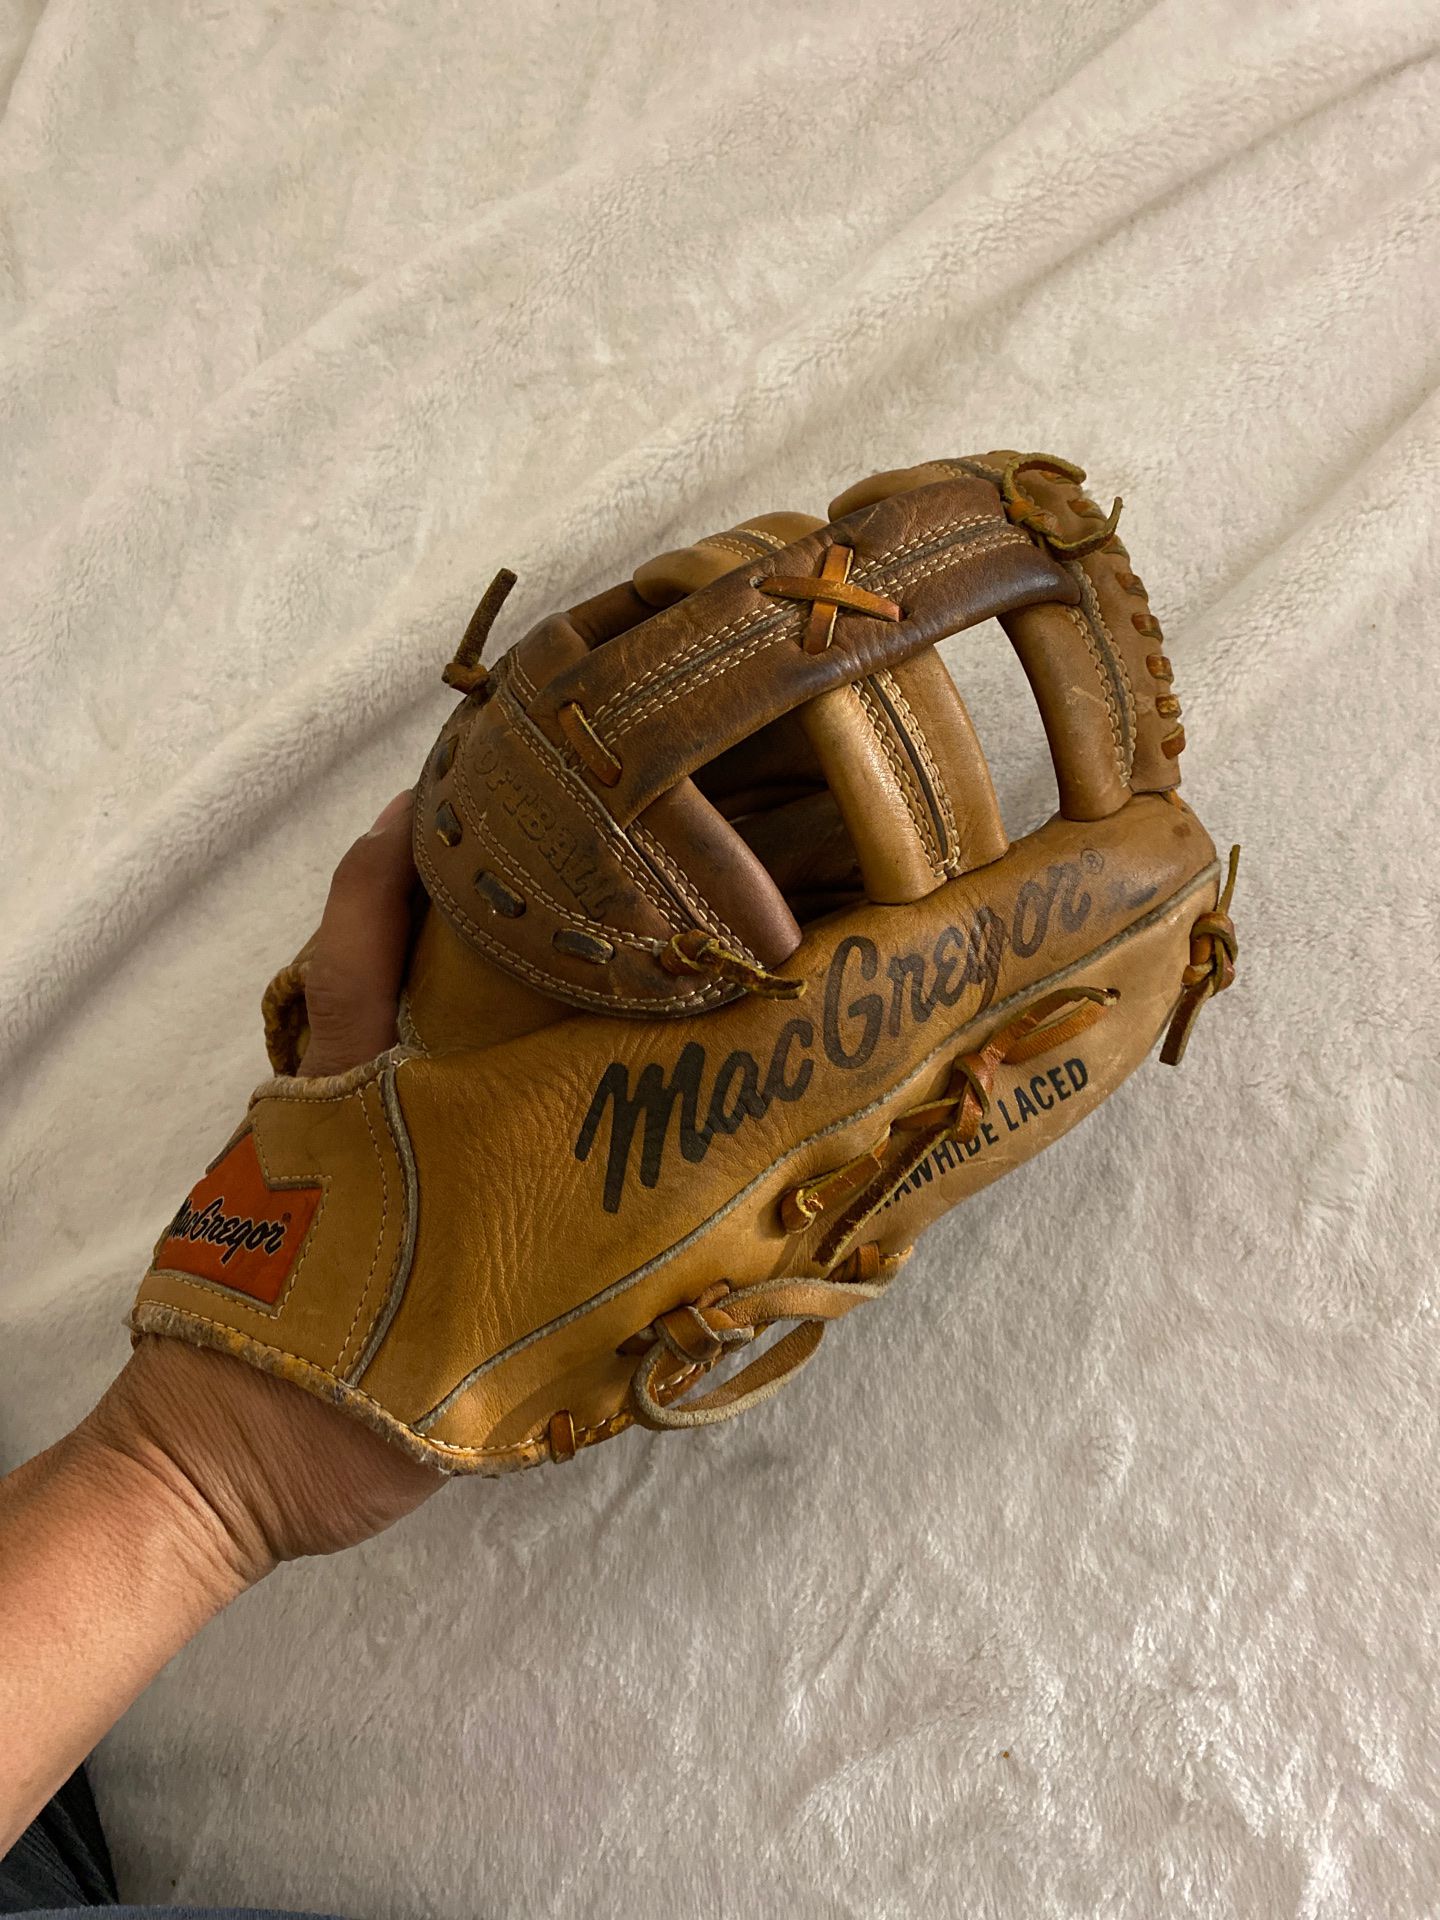 14 inch slow pitch softball glove